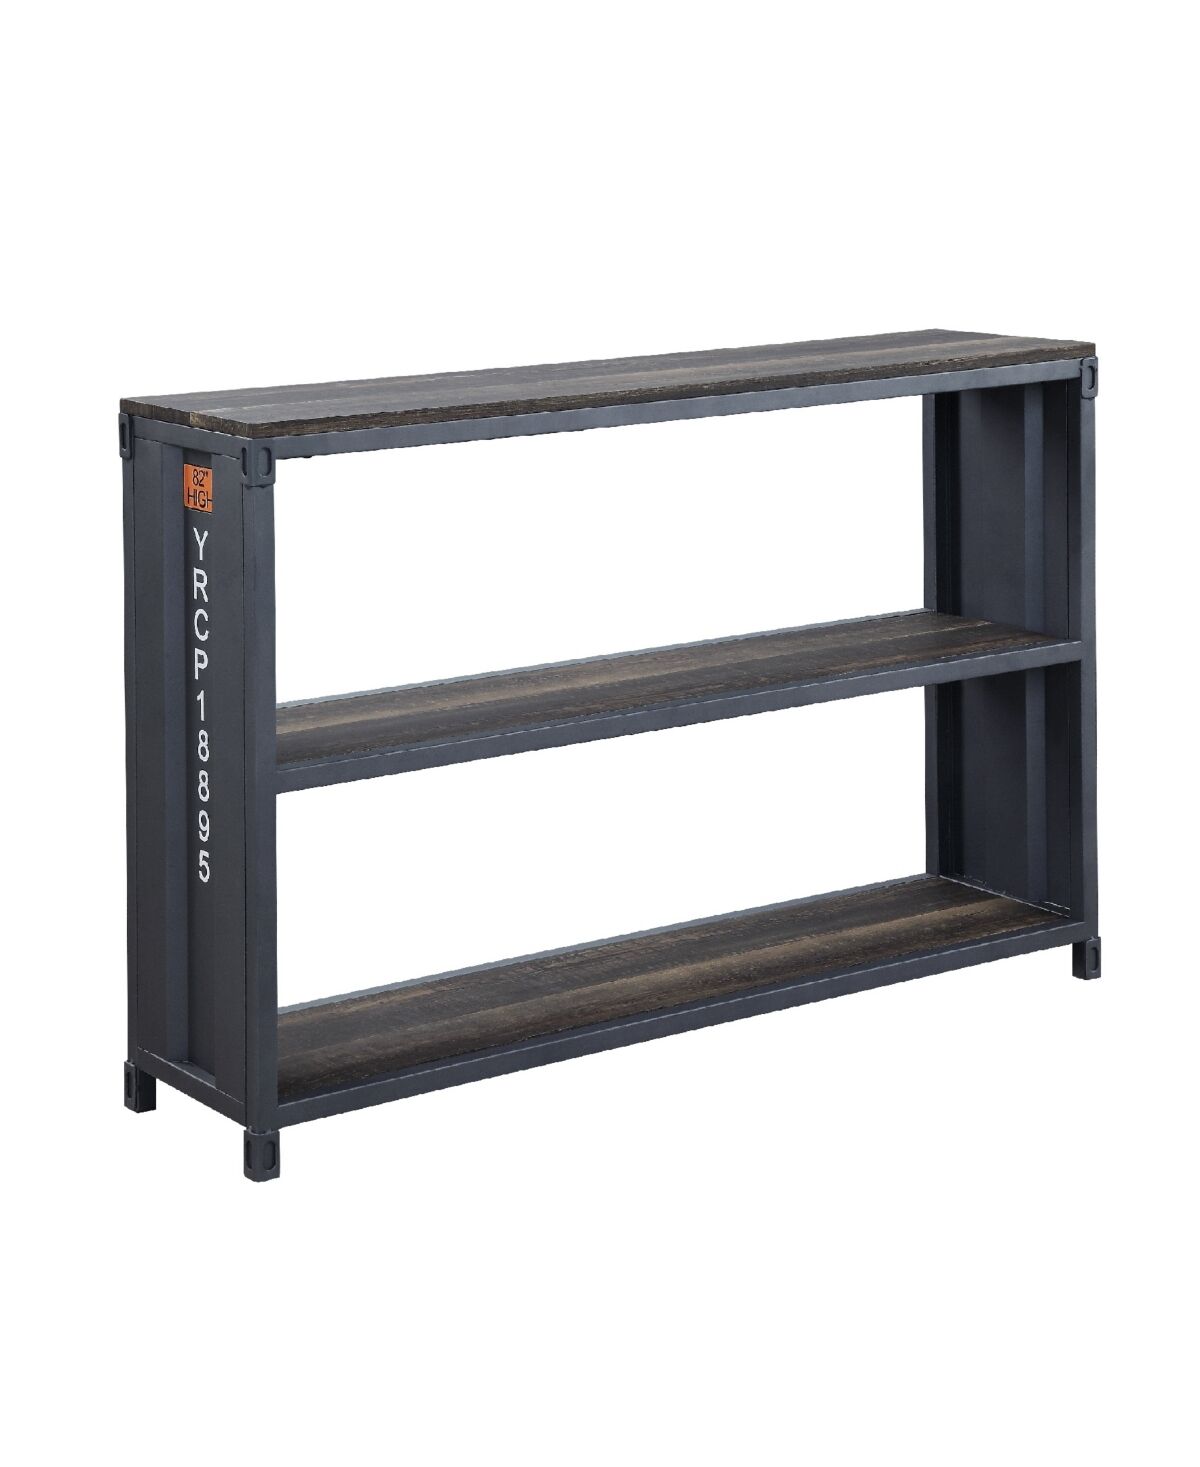 Acme Furniture Cargo Bookshelf - Brown